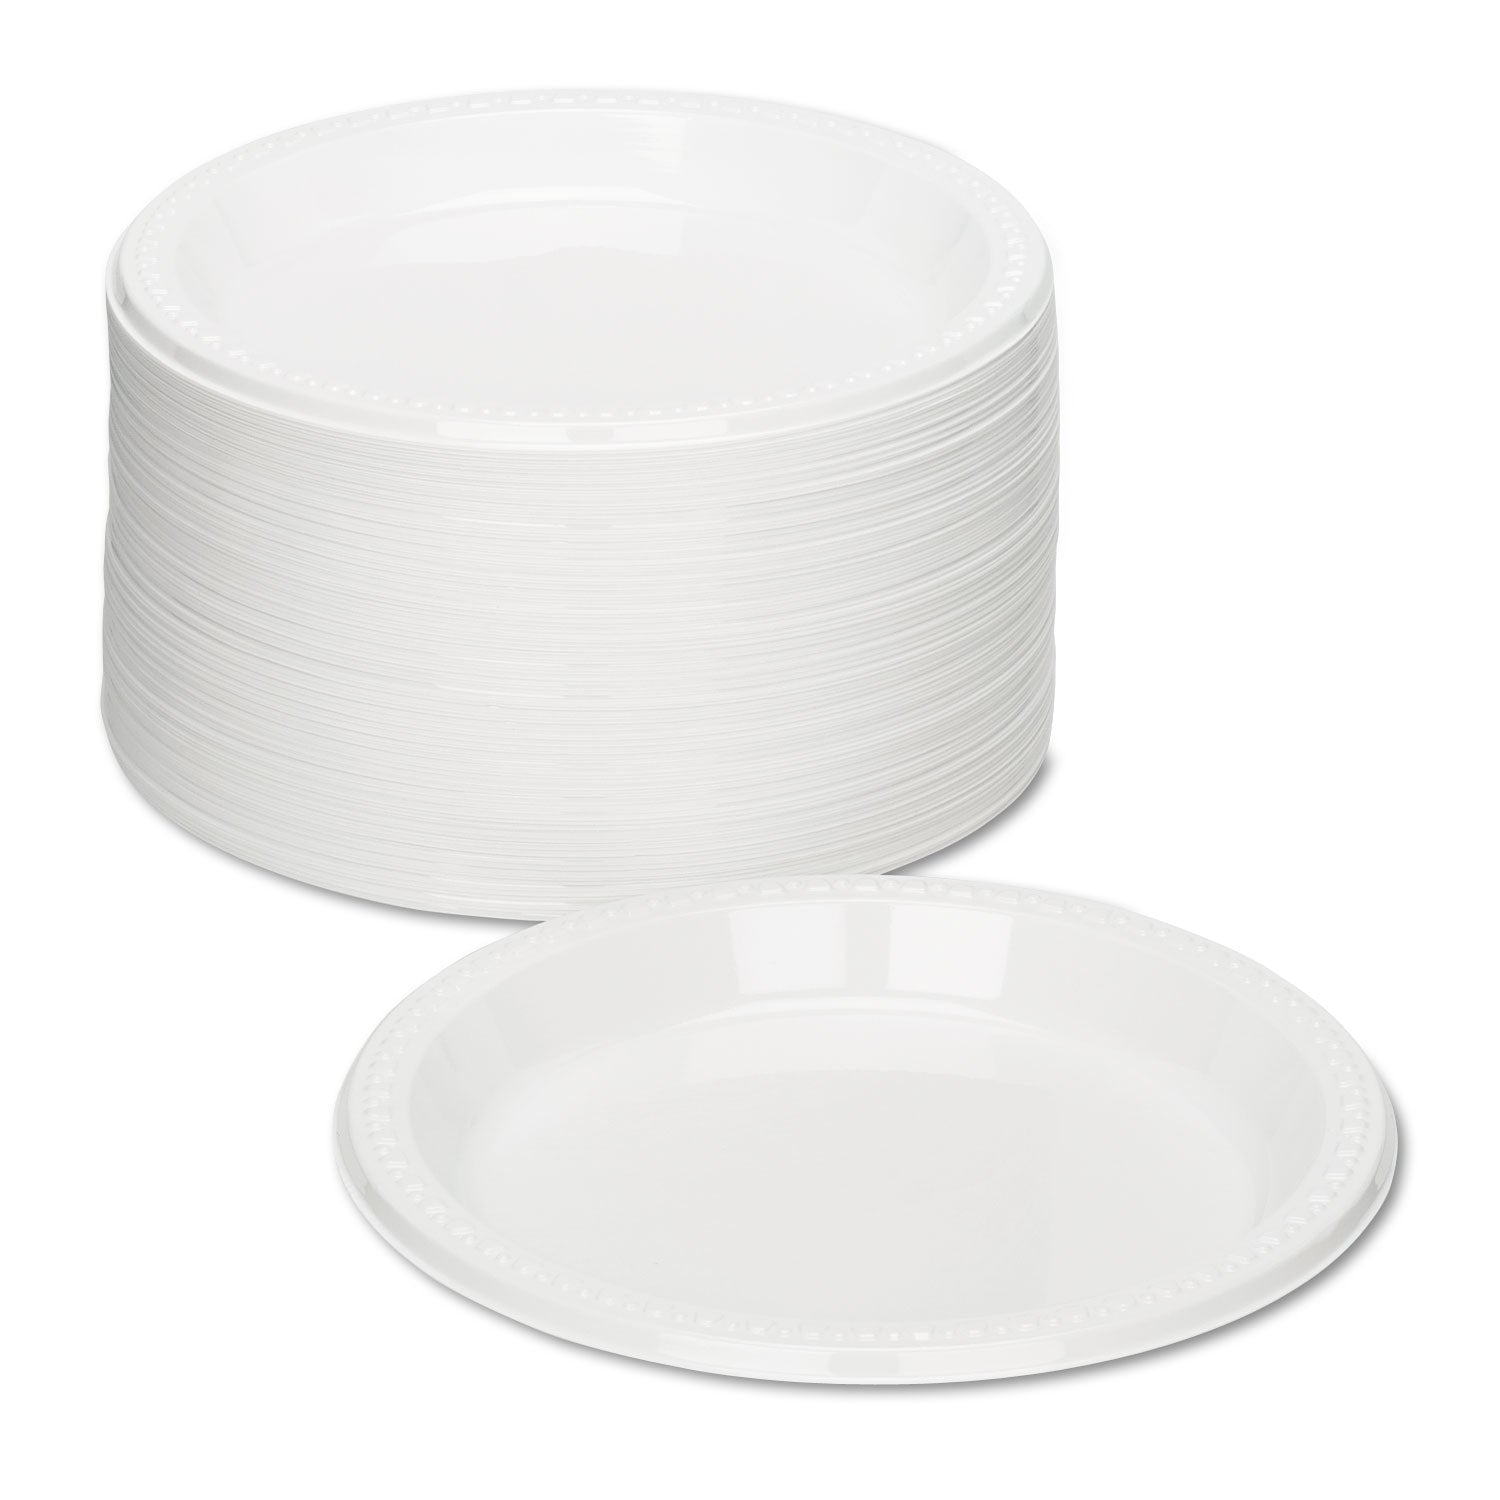 Plastic Dinnerware, Plates, 9" dia, White, 500/Carton - 